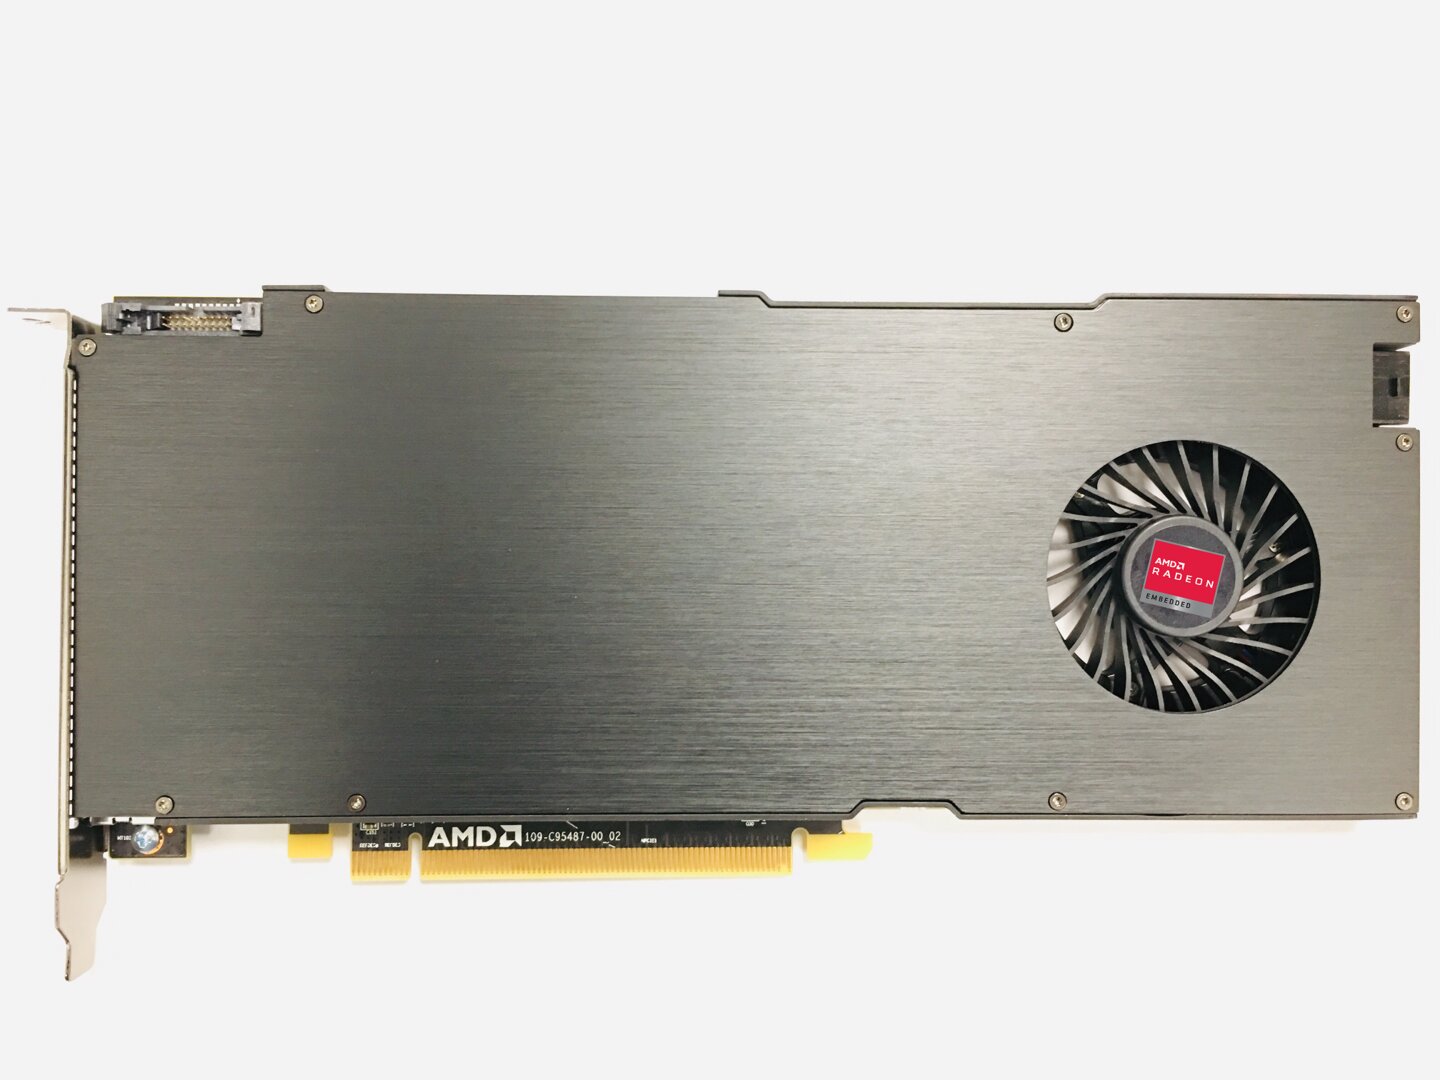 AMD Radeon Embedded E9560